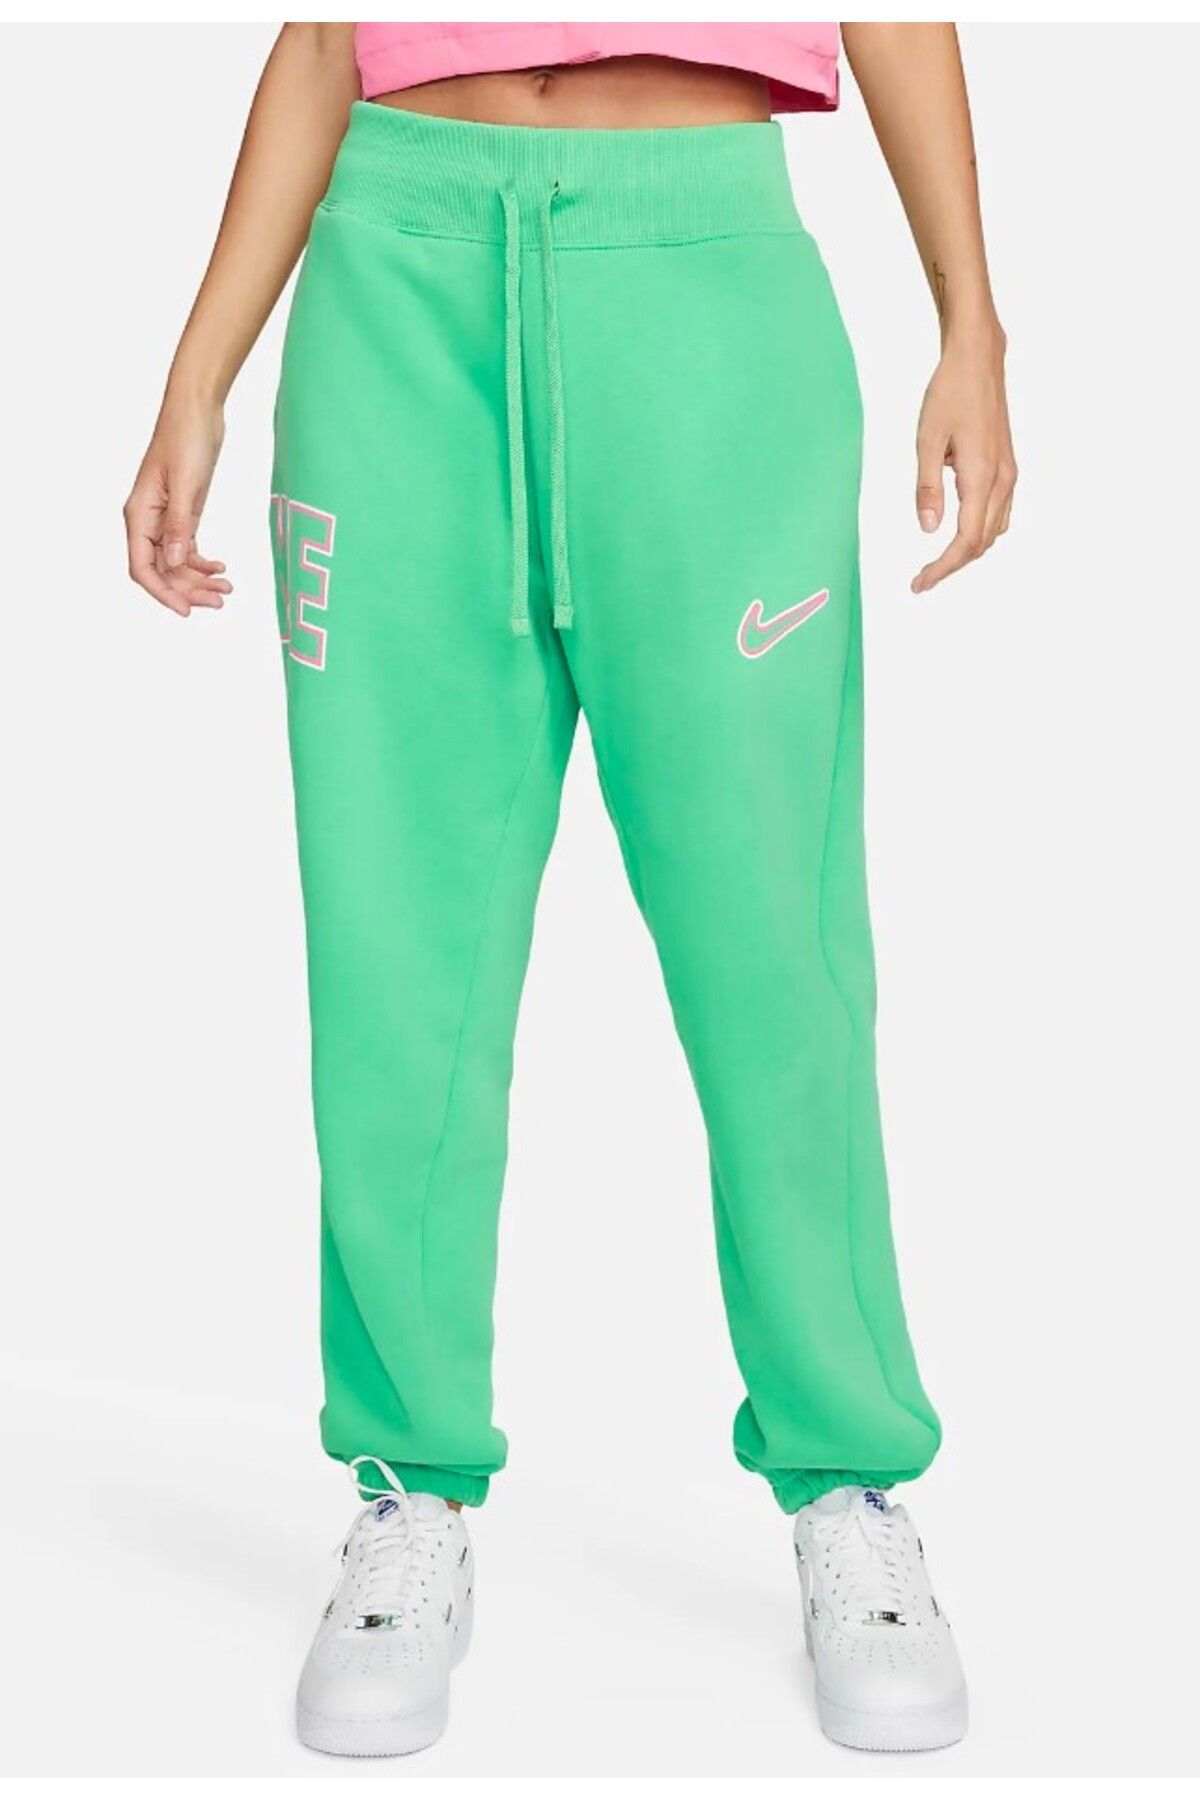 Nike Sportswear Phoenix Fleece Pant Pink Pamuklu Pembe Eşojman Altı